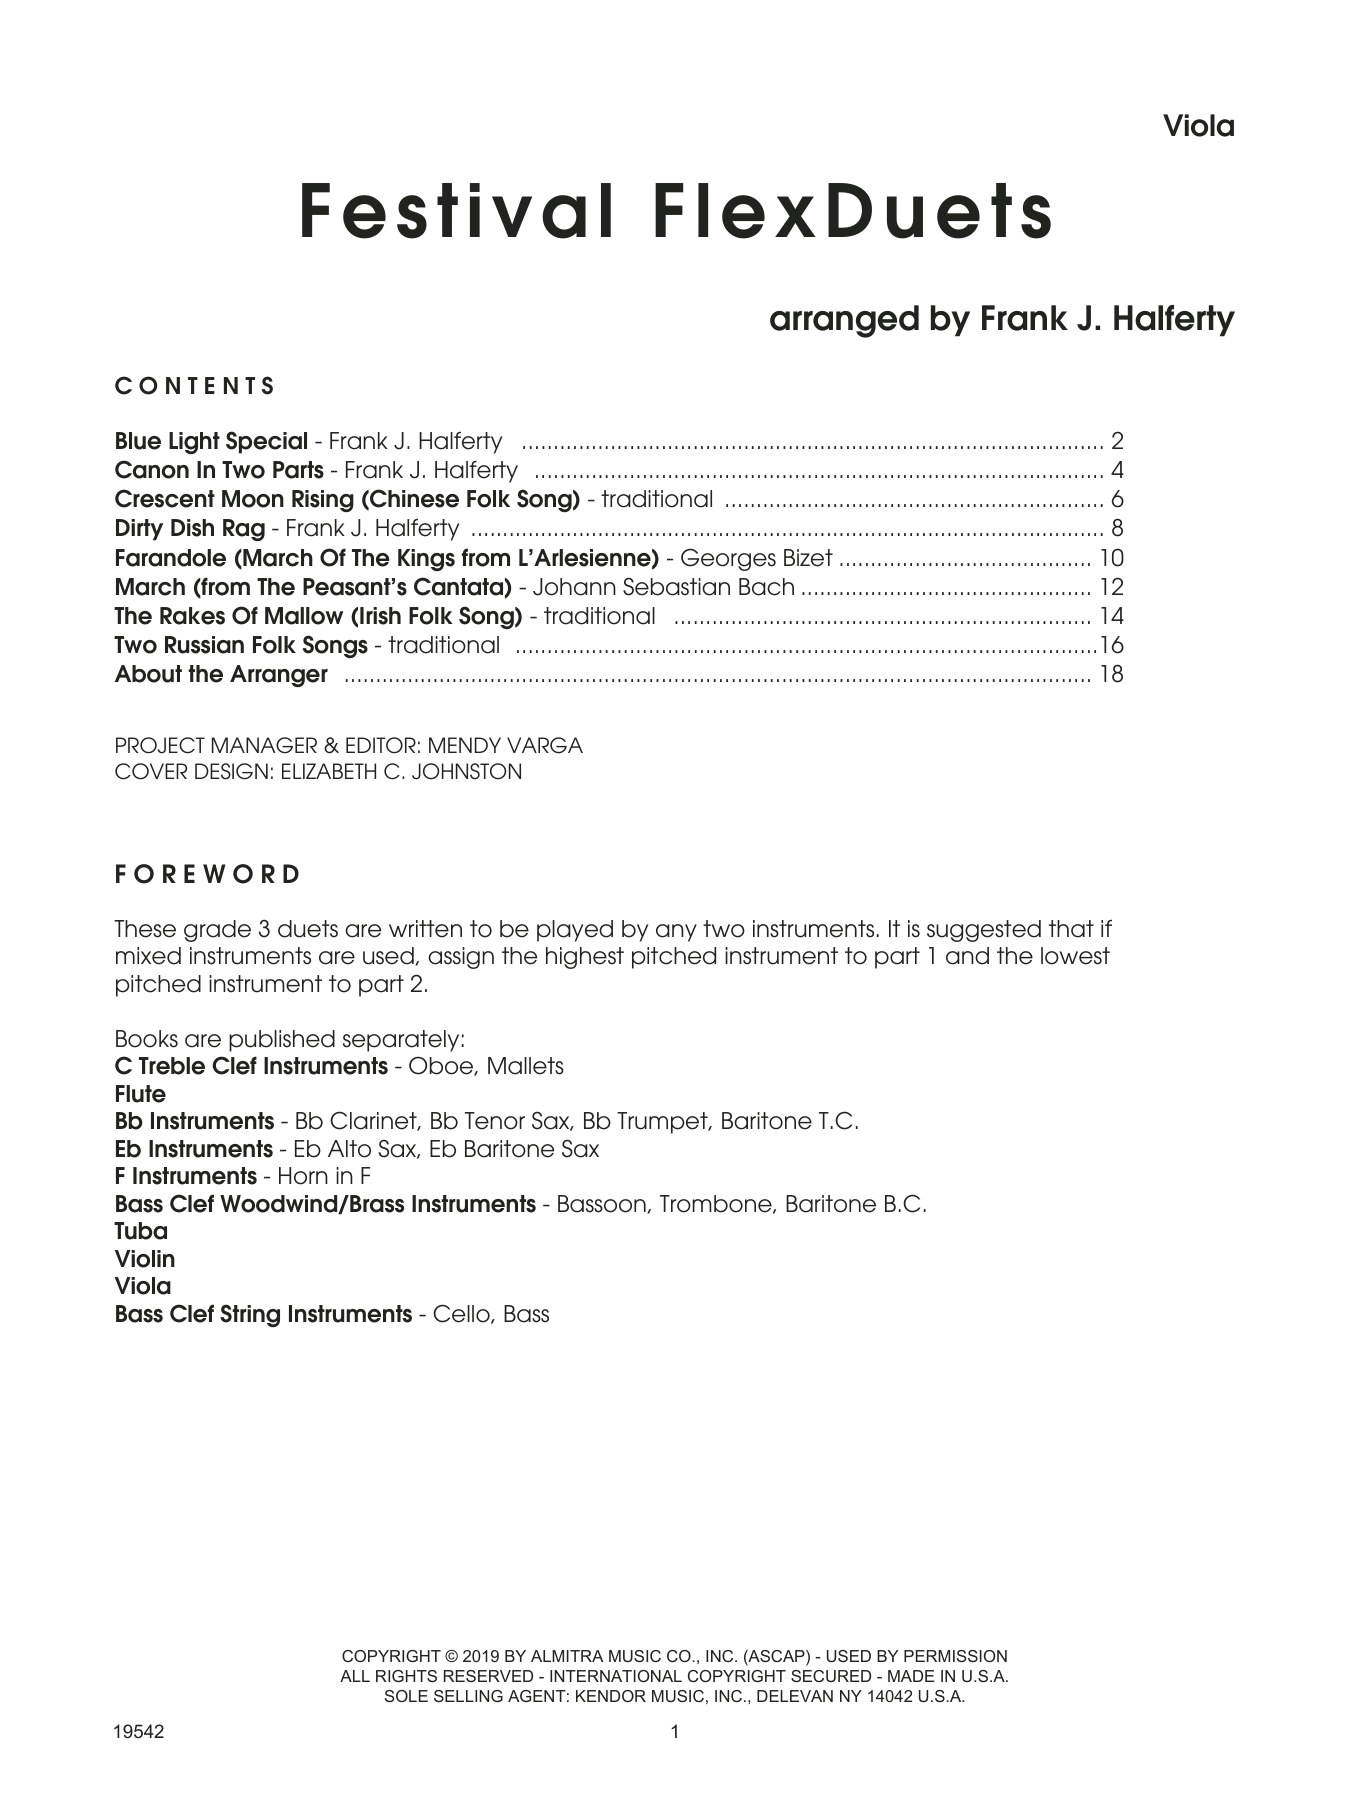 Festival FlexDuets - Viola (String Ensemble) von Frank J. Halferty